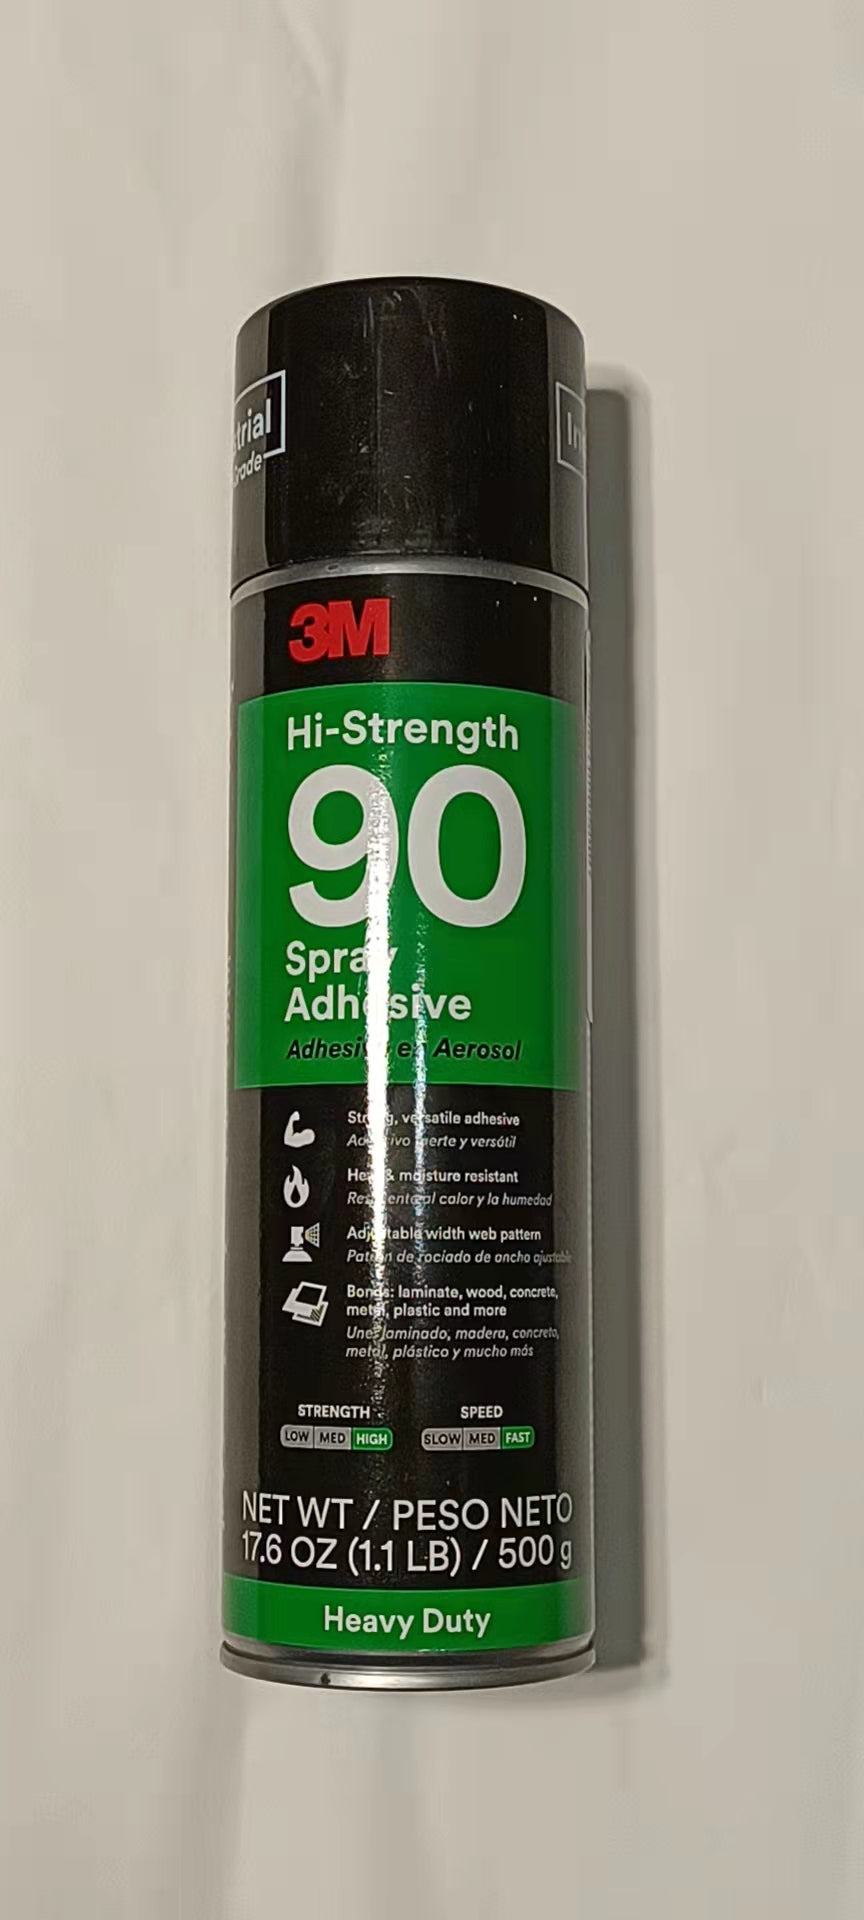 3M™ Hi-Strength 90 Spray Adhesive